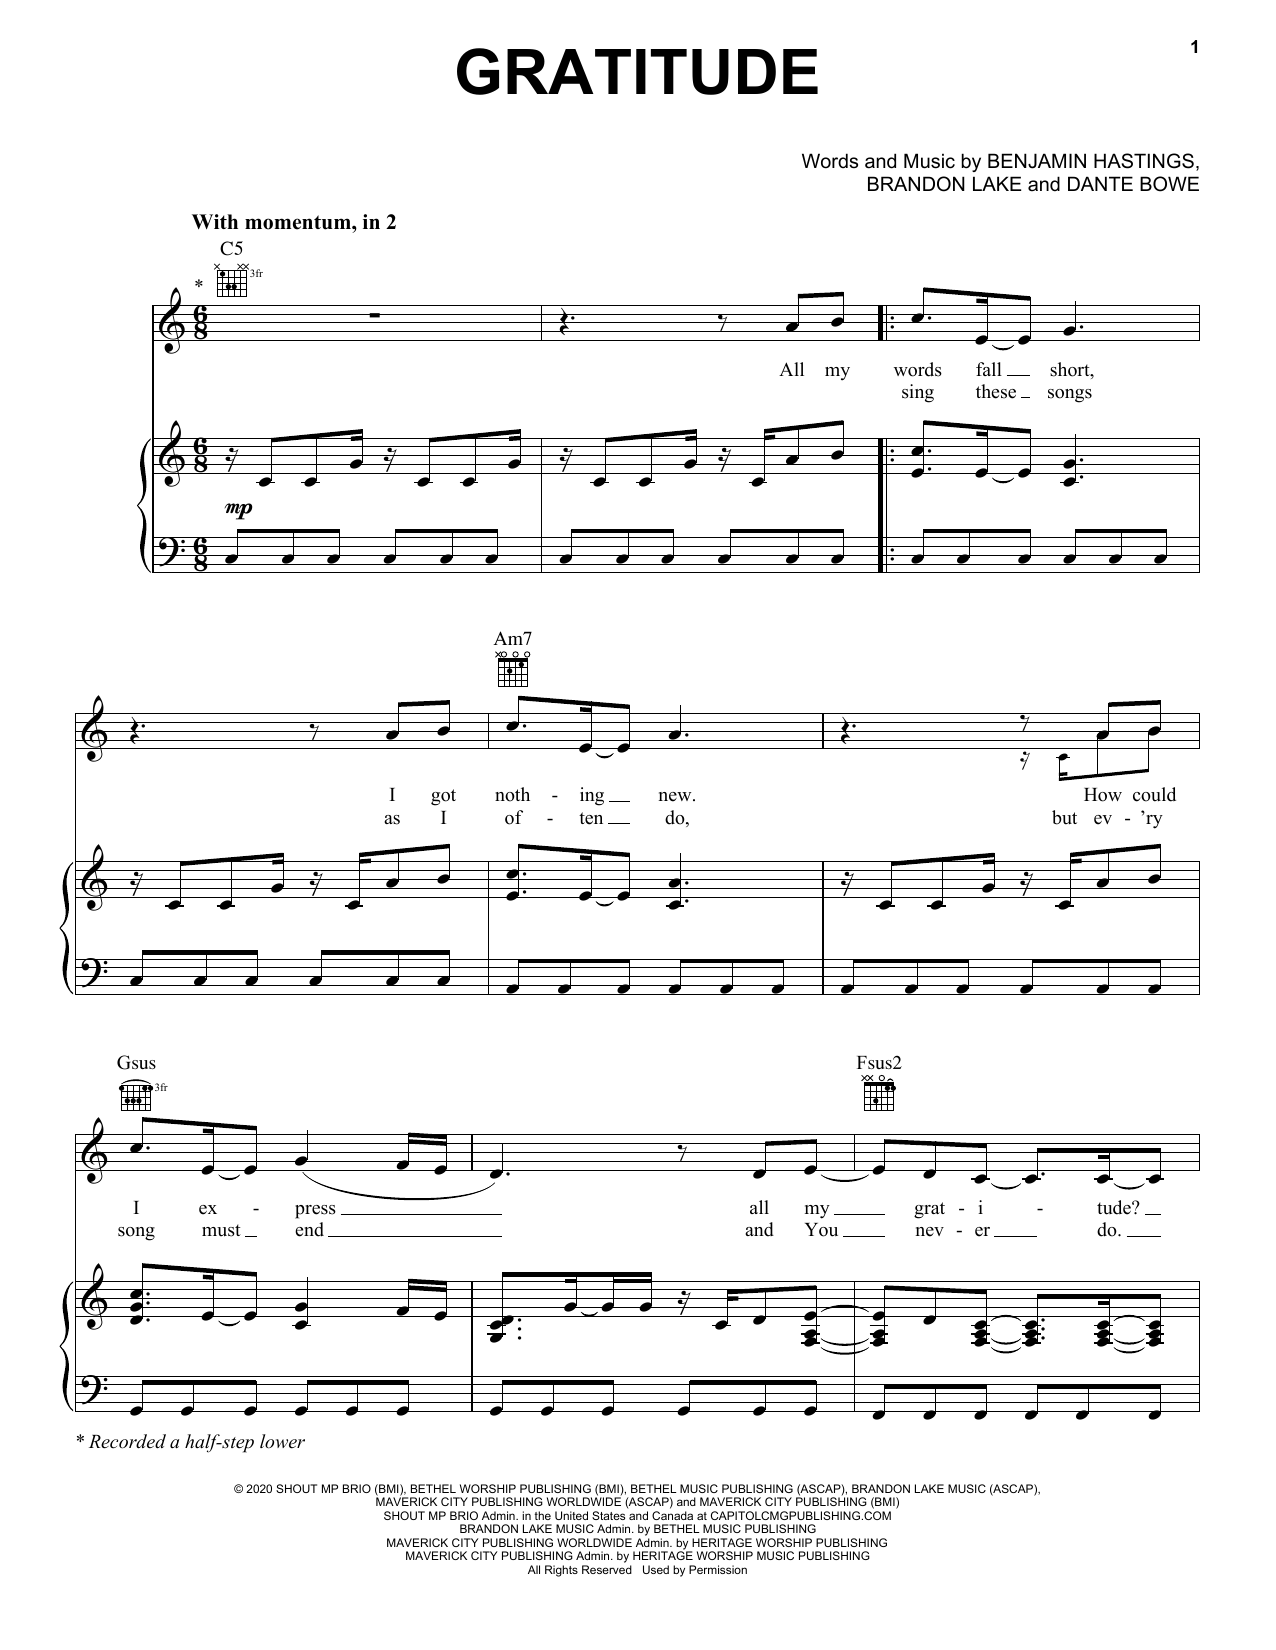 Brandon Lake Gratitude Sheet Music Notes & Chords for Easy Piano - Download or Print PDF